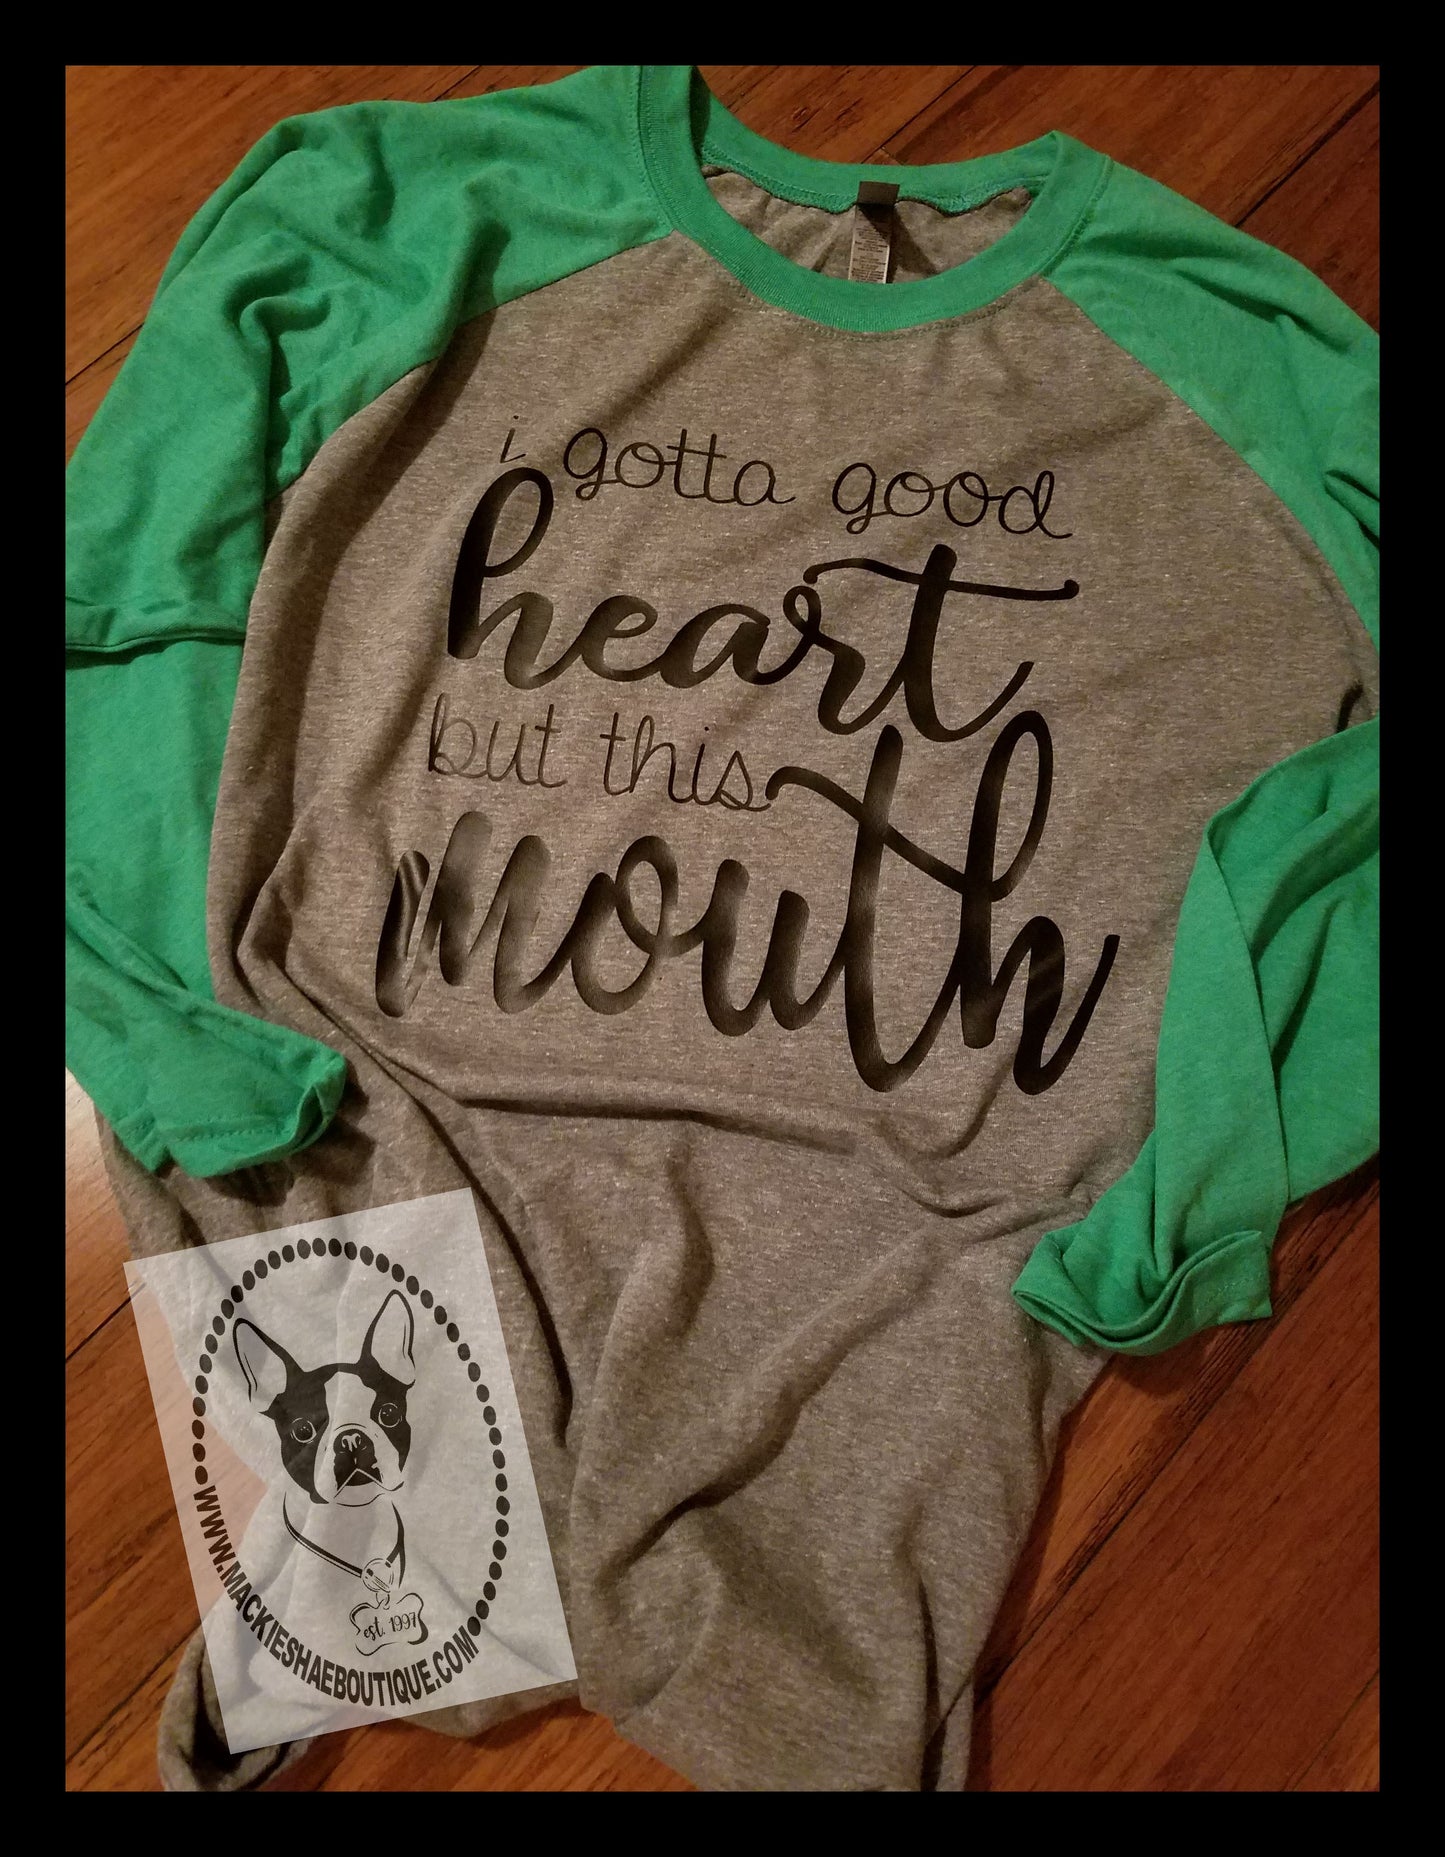 I Gotta Good Heart but this Mouth Custom Shirt, 3/4 Sleeve